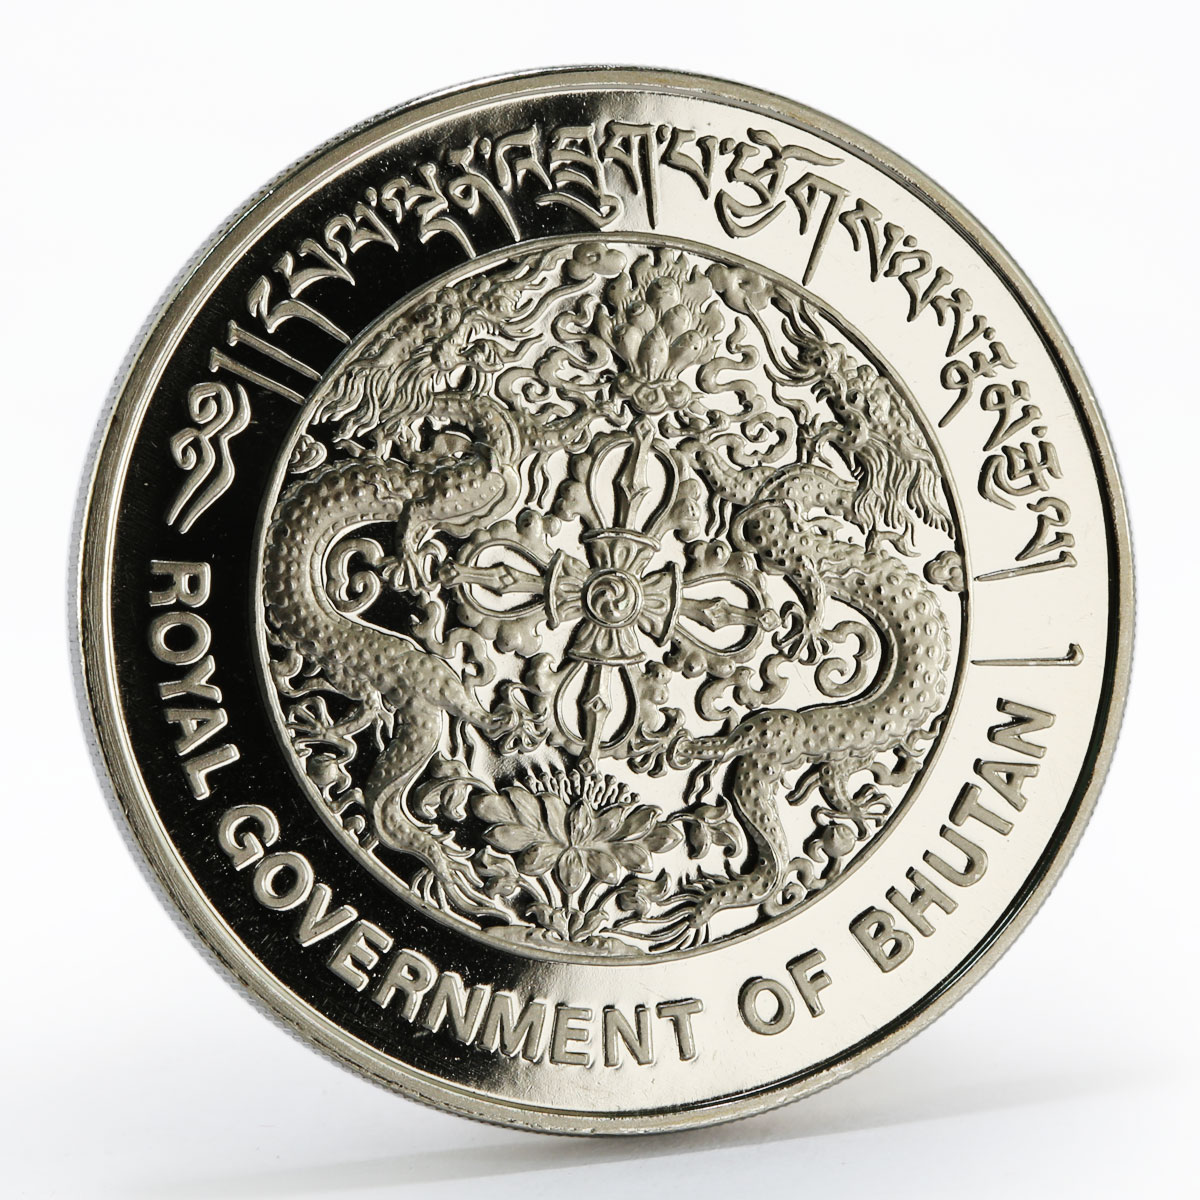 Bhutan 25 ngultrums International Games Shot Put proof nickel coin 1984